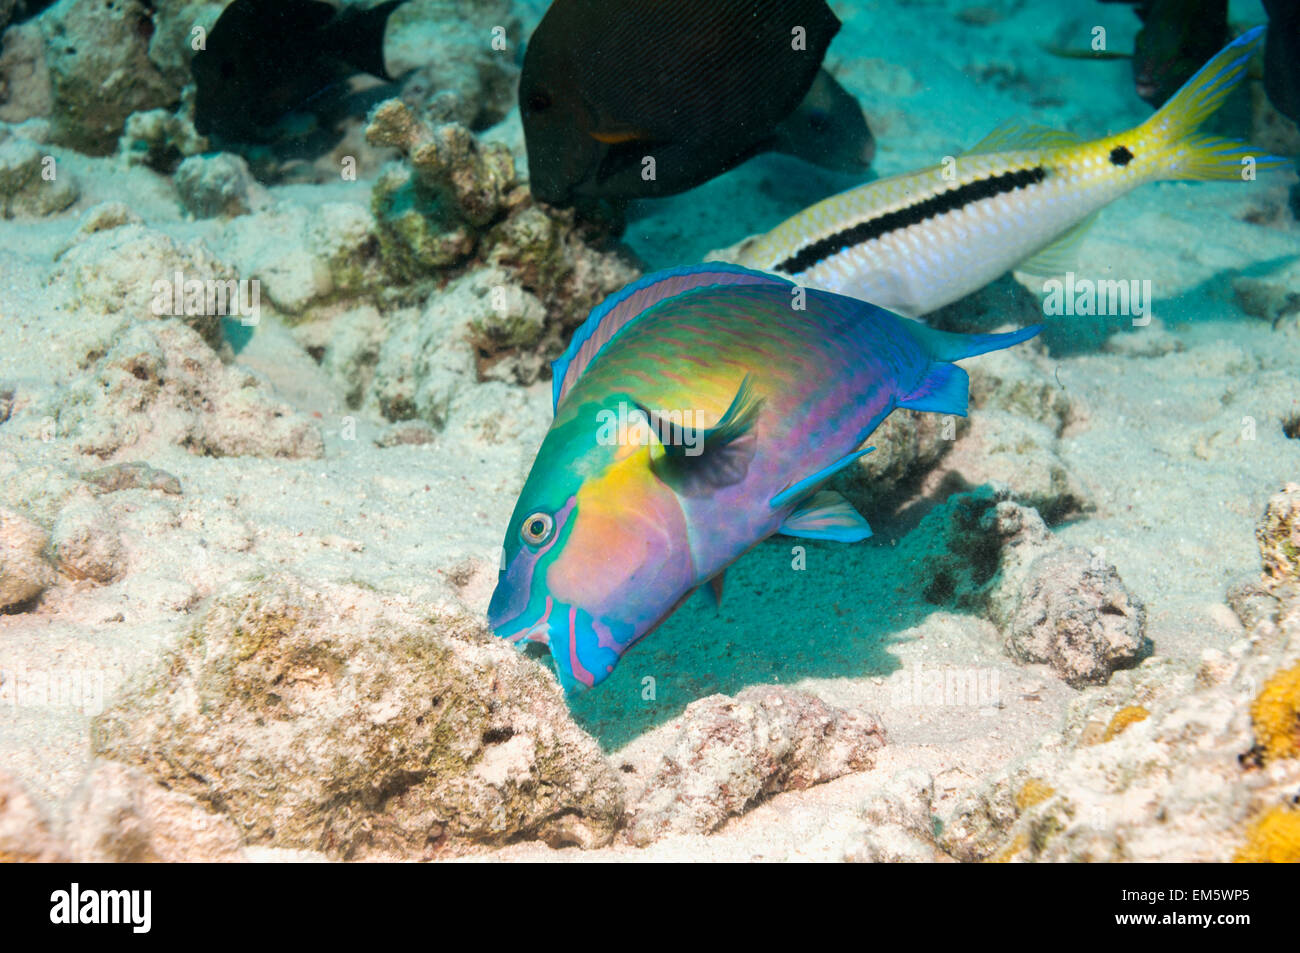 Purplestreak or Sinai parrotfish (Chlorurus genazonatus) grazing on coral rock.  Egypt, Red Sea. Stock Photo